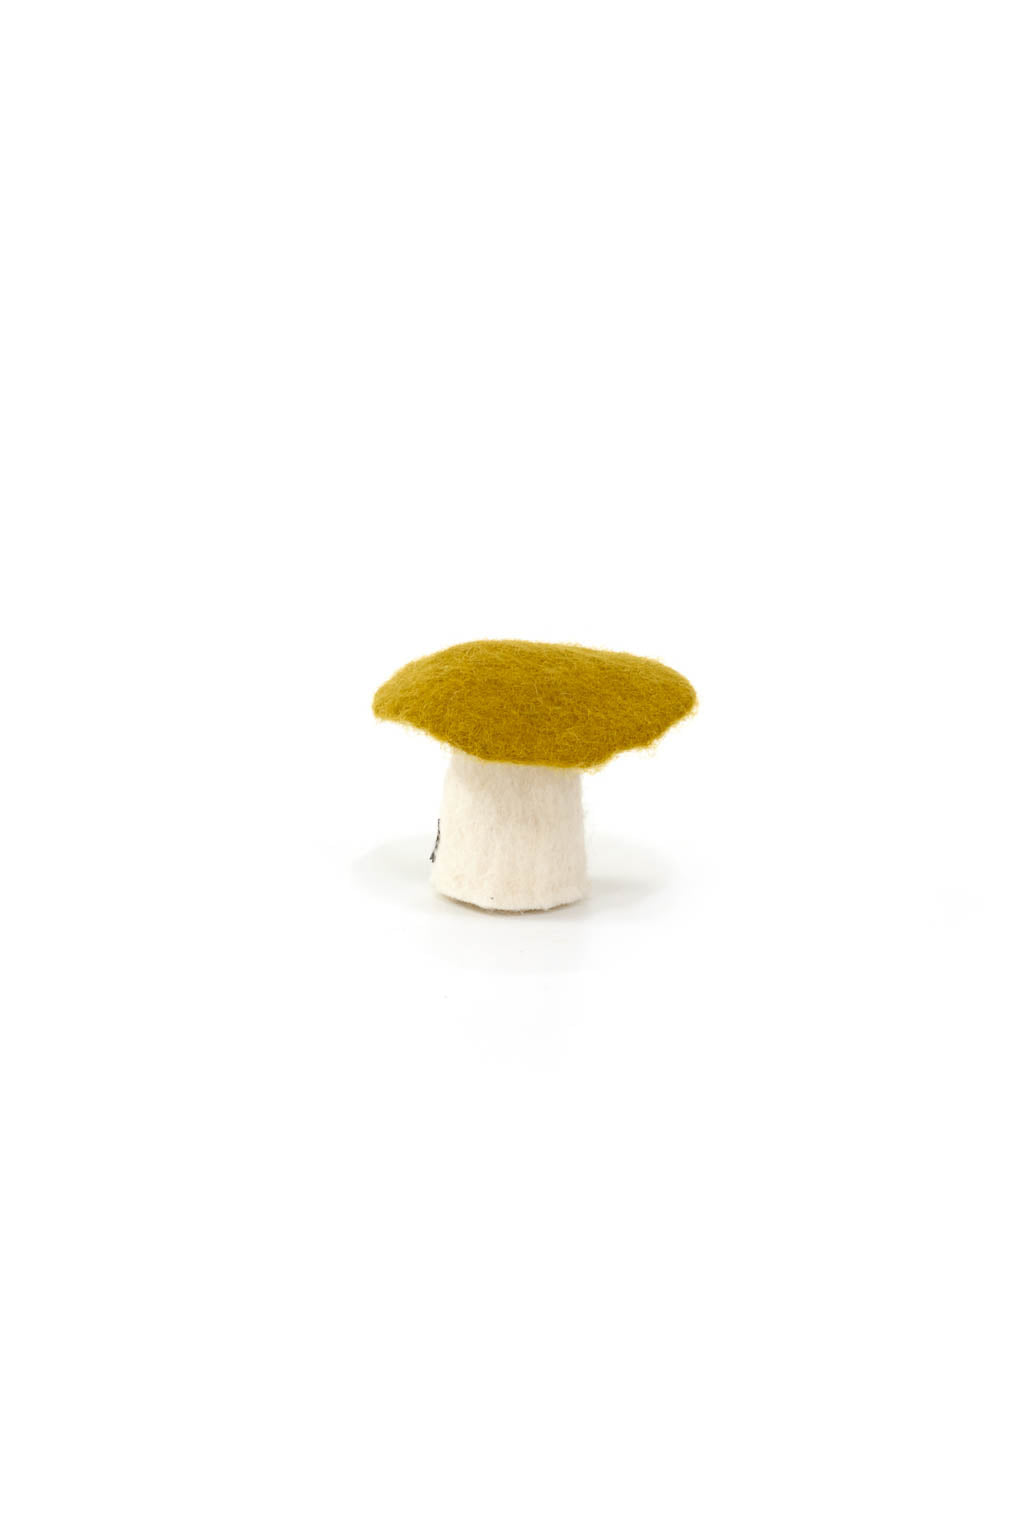 Mushroom - Small 6cm